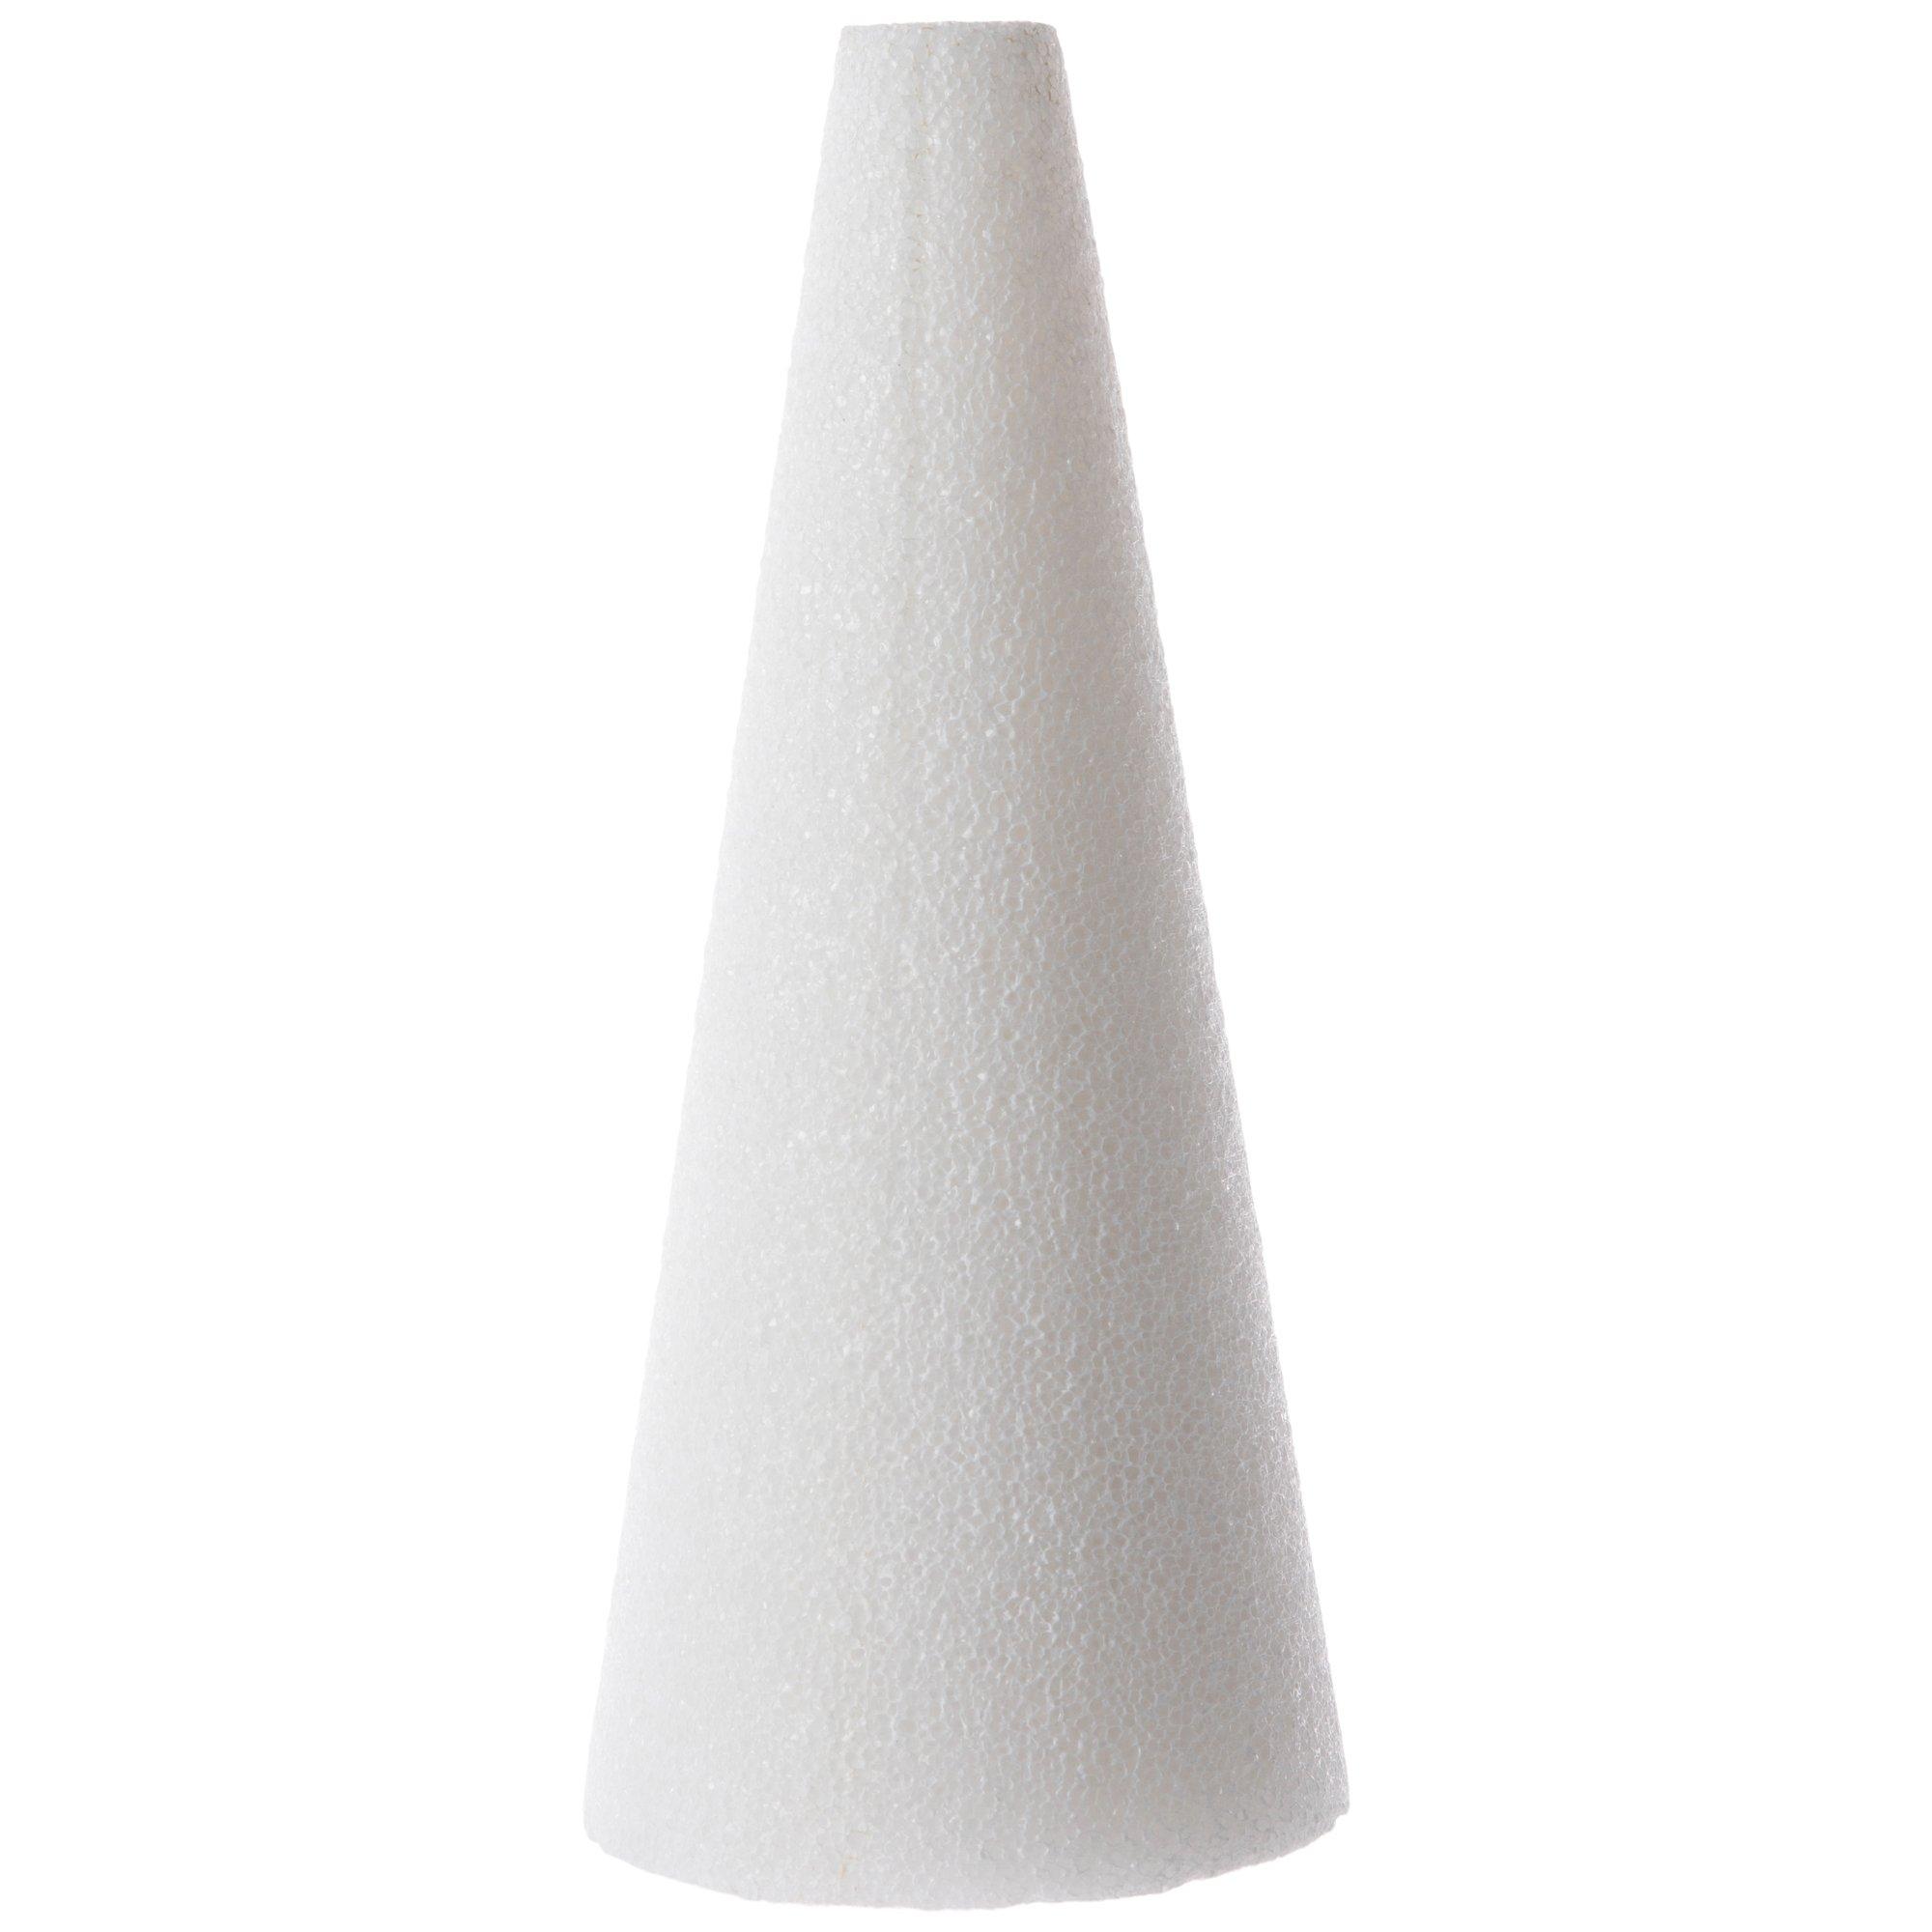 Cone - 8 x 3 - Styrofoam